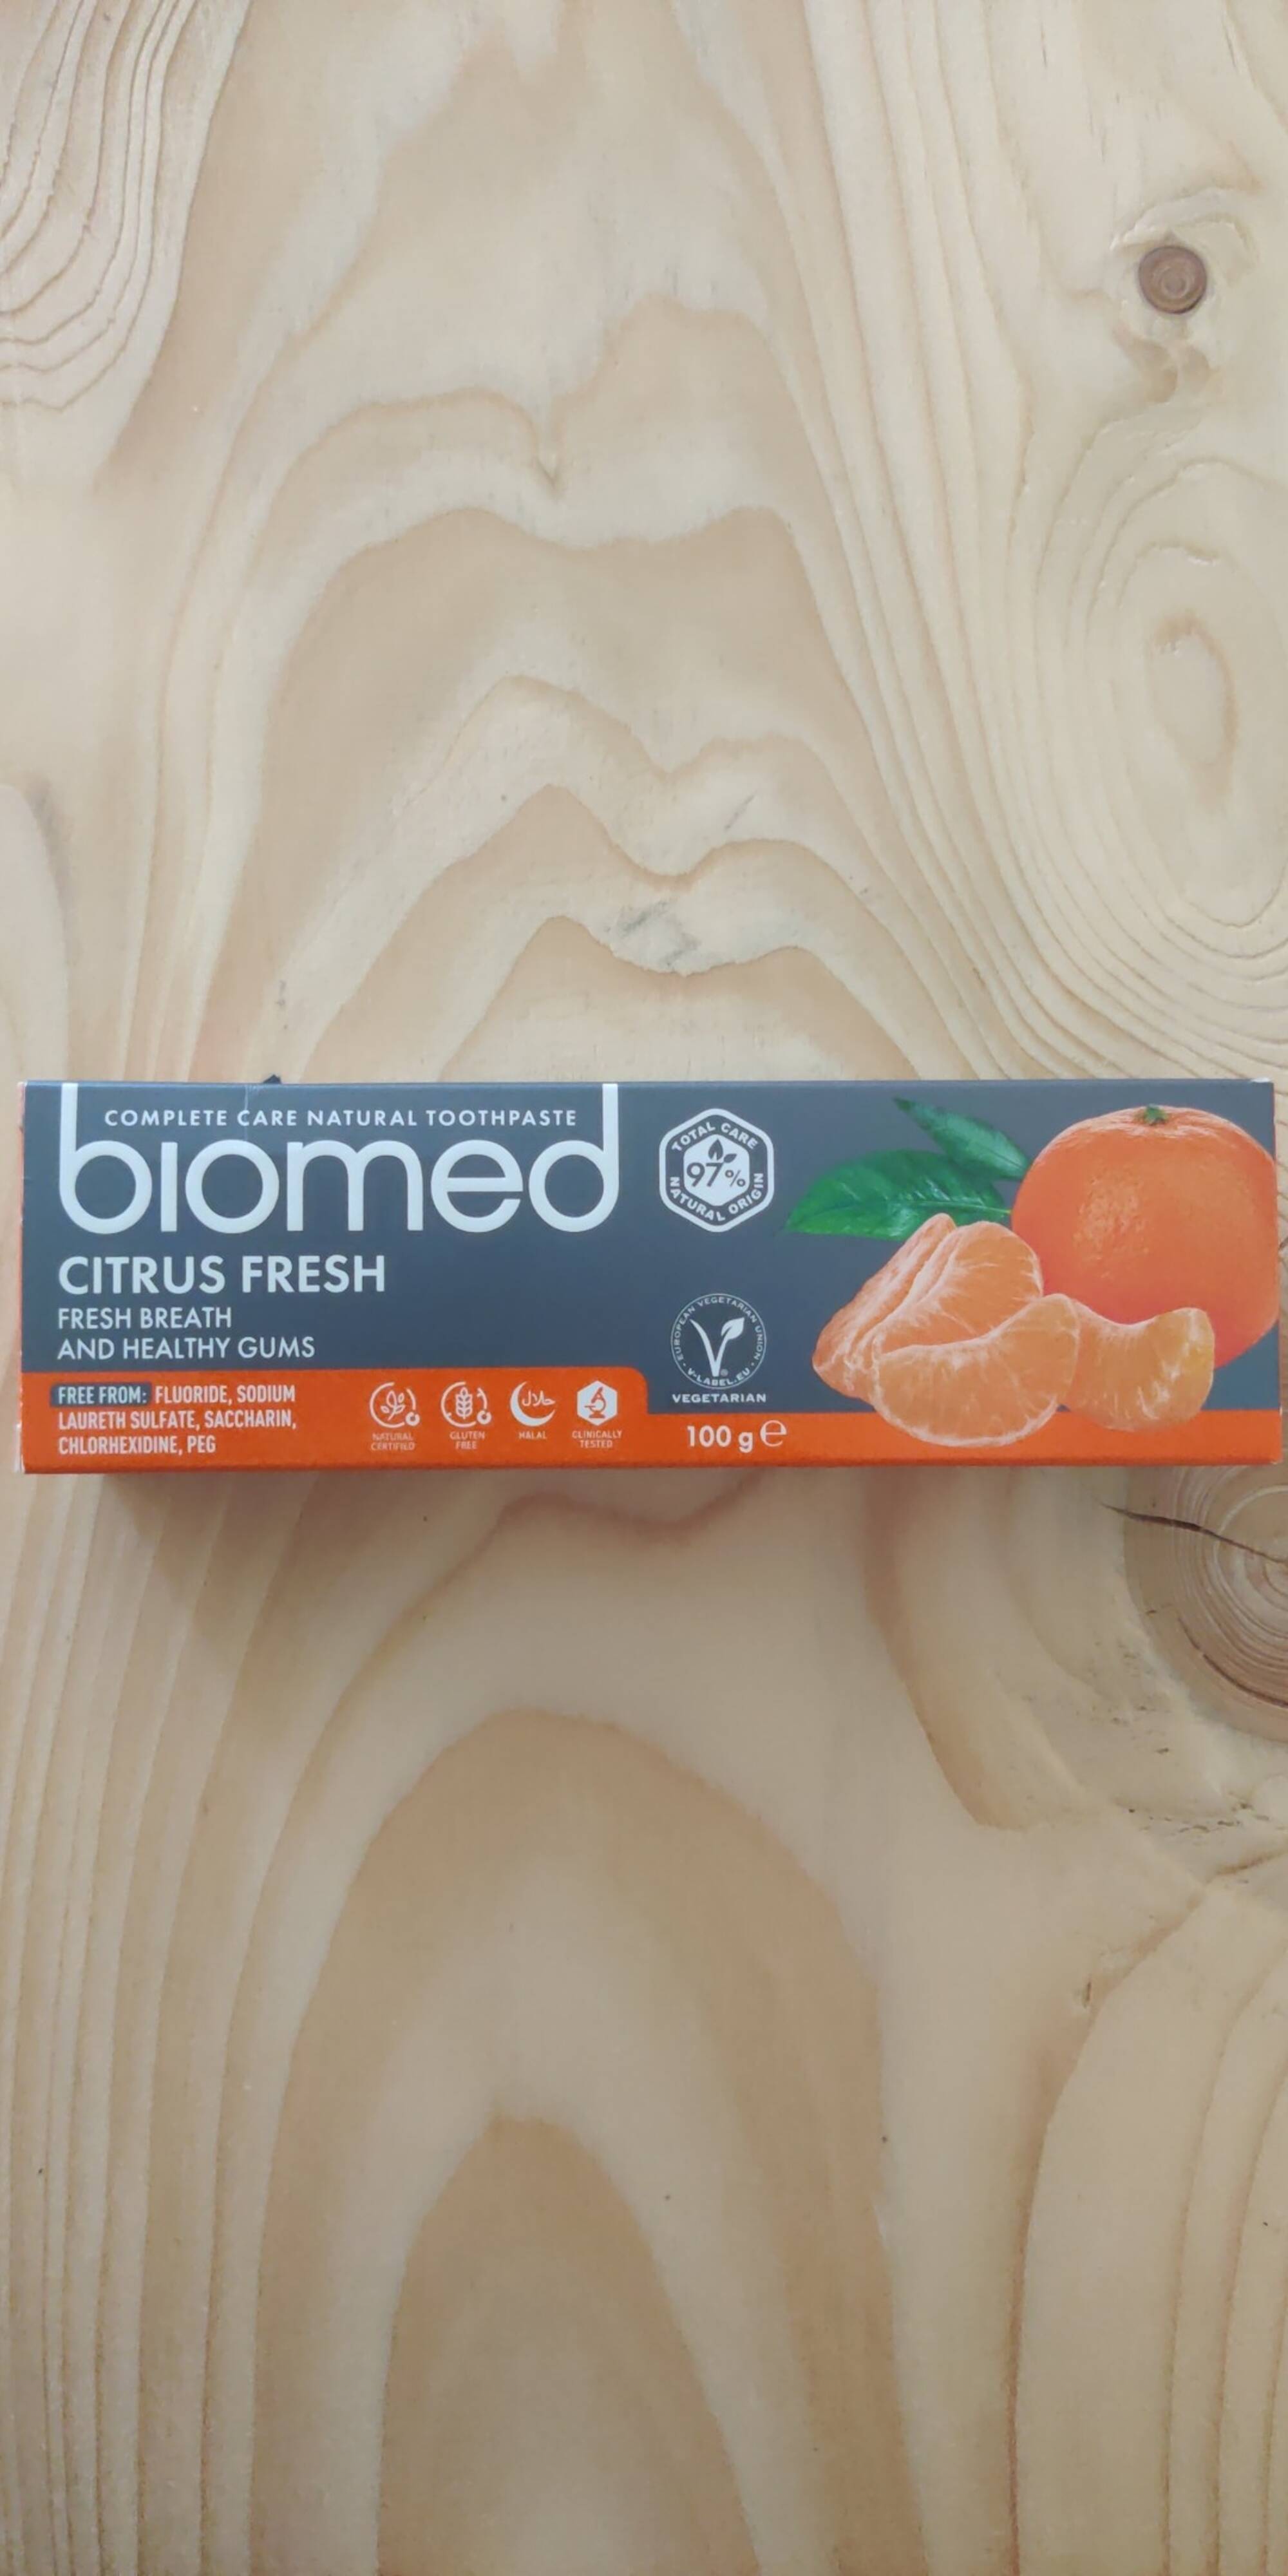 BIOMED - Citrus fresh - Toothpaste